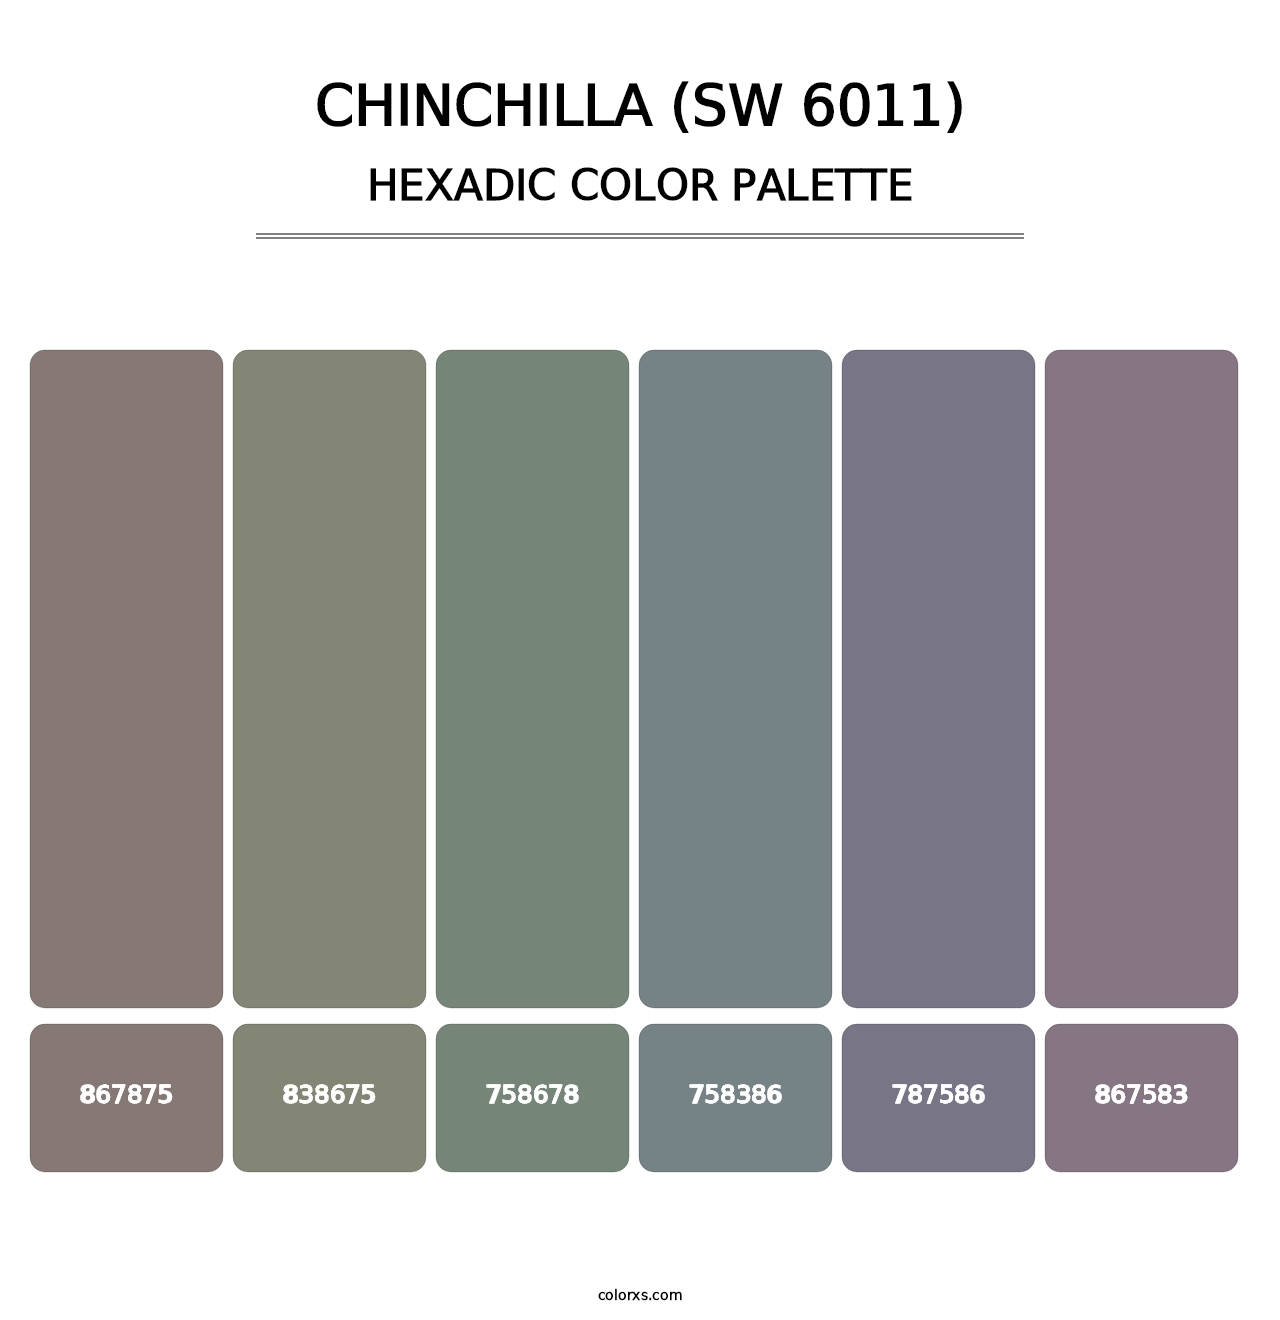 Chinchilla (SW 6011) - Hexadic Color Palette